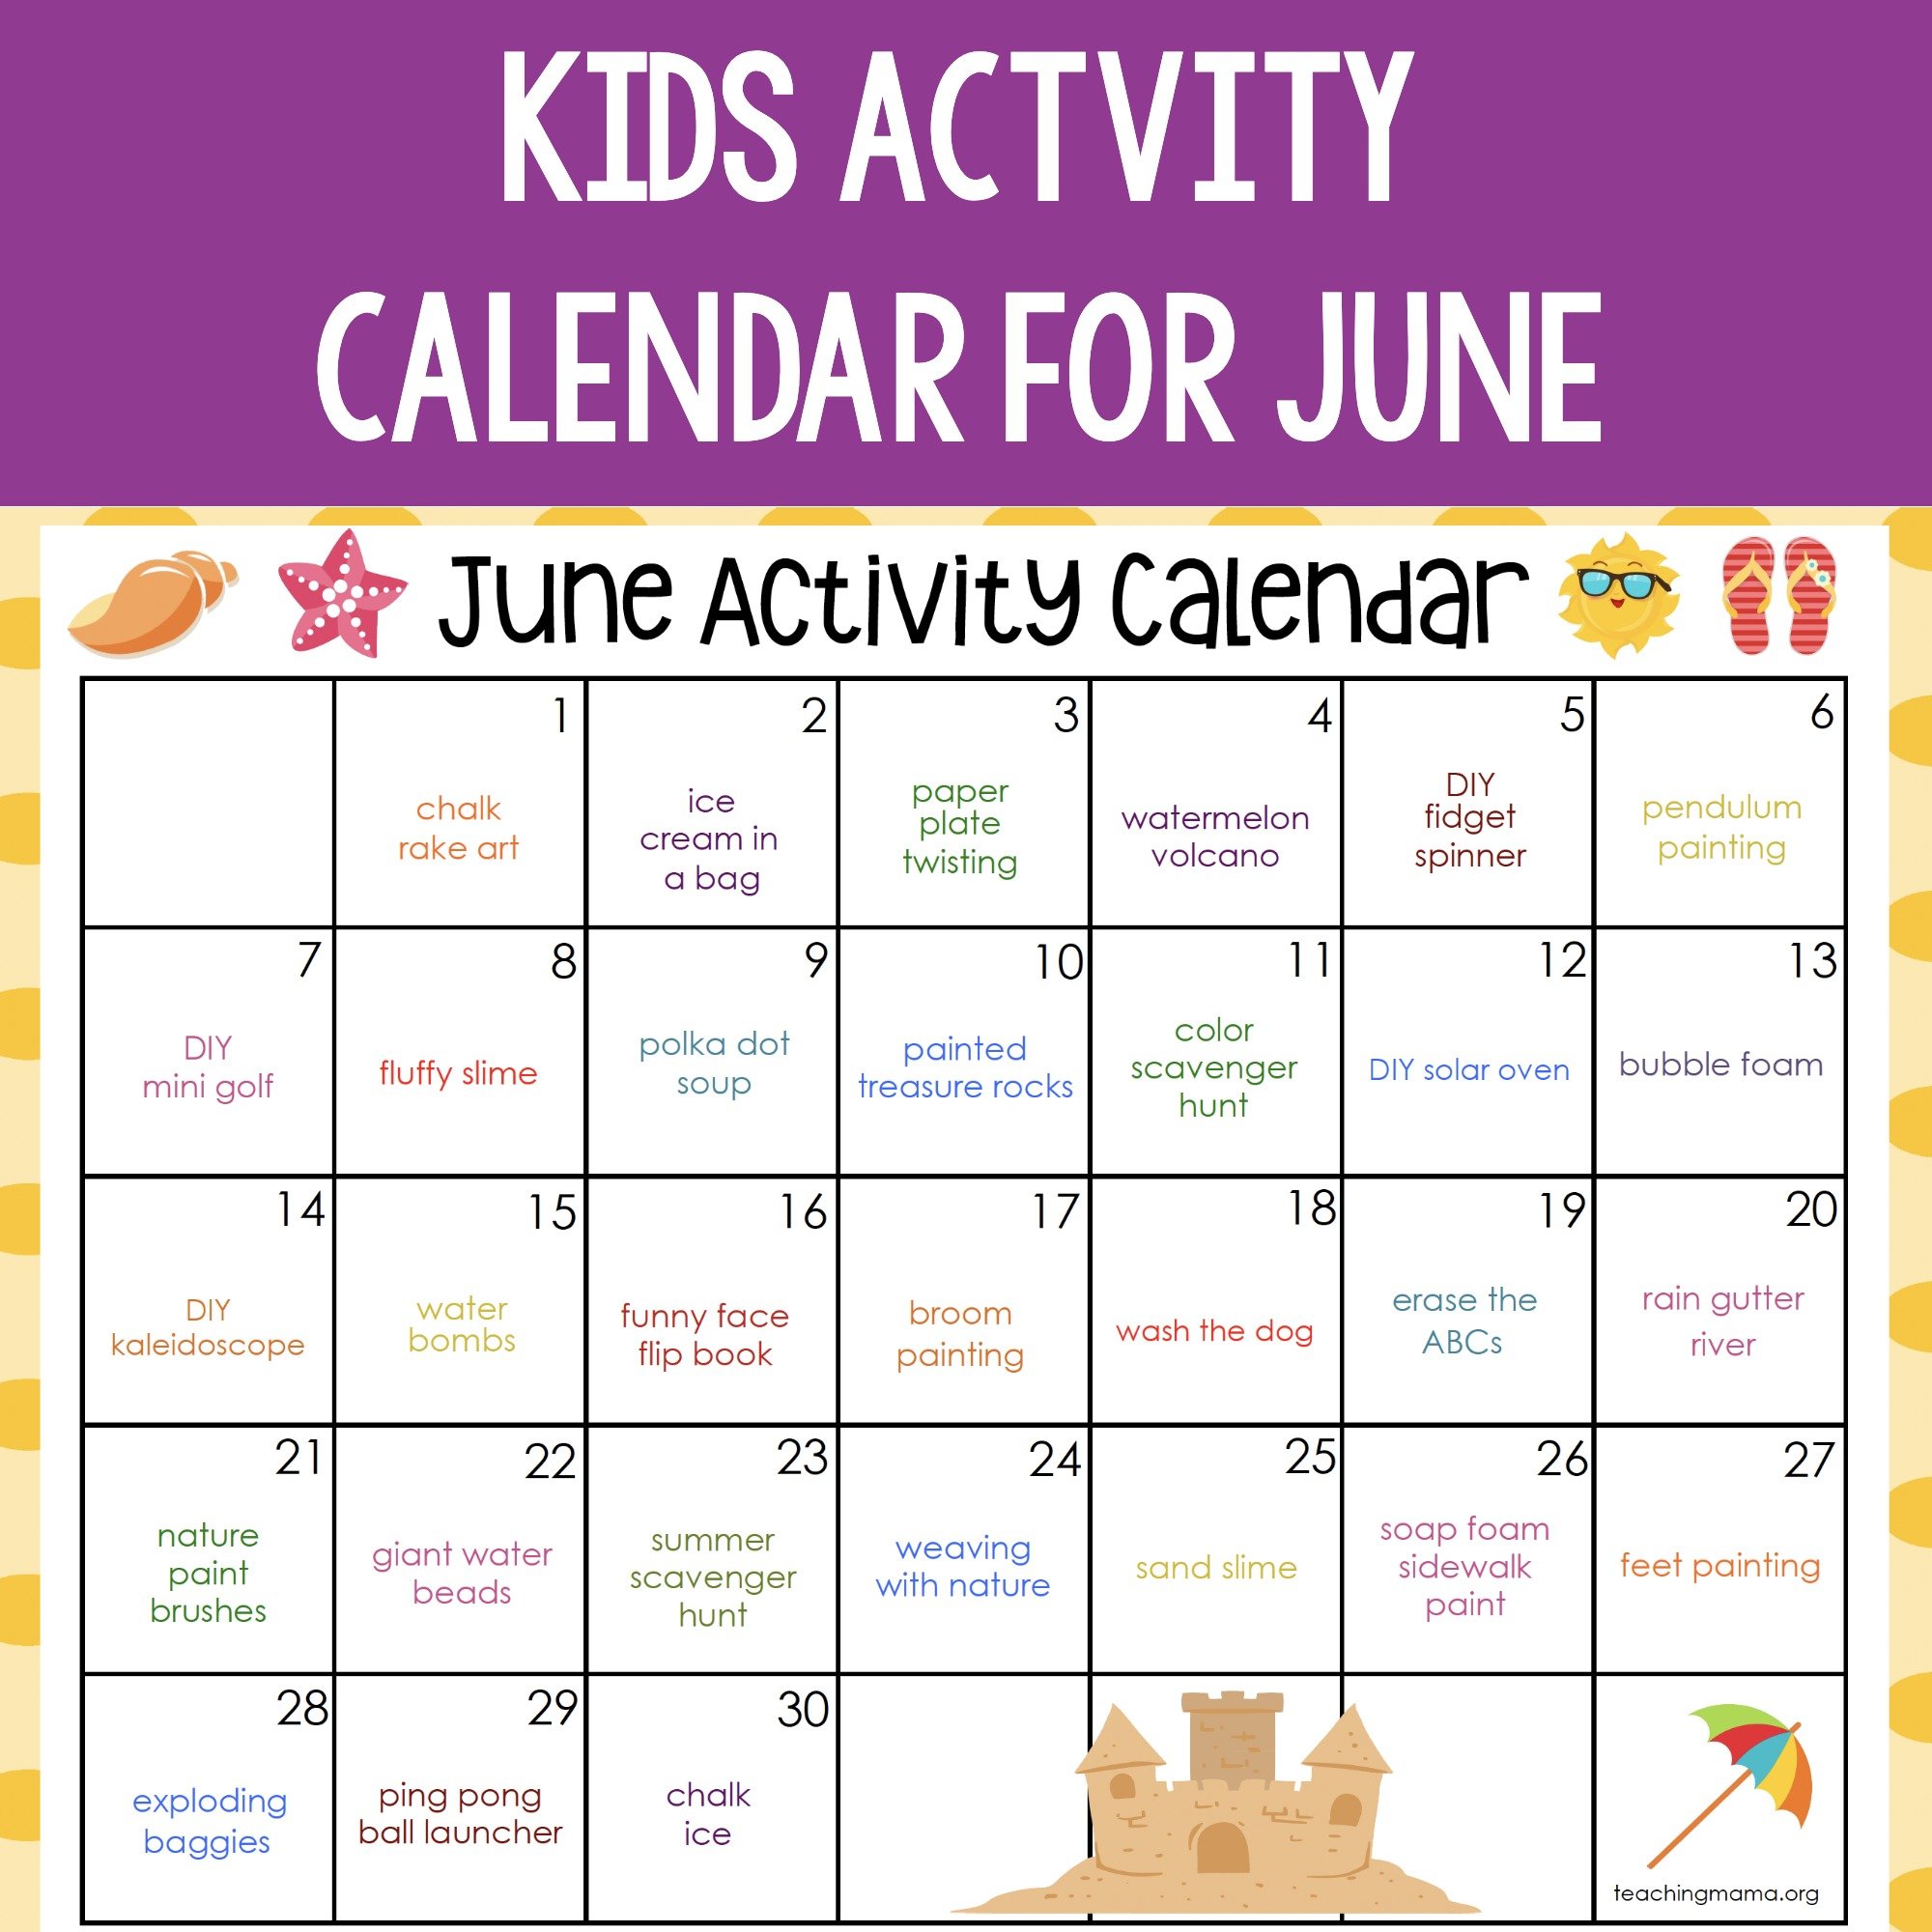 June Activity Calendar LaptrinhX / News